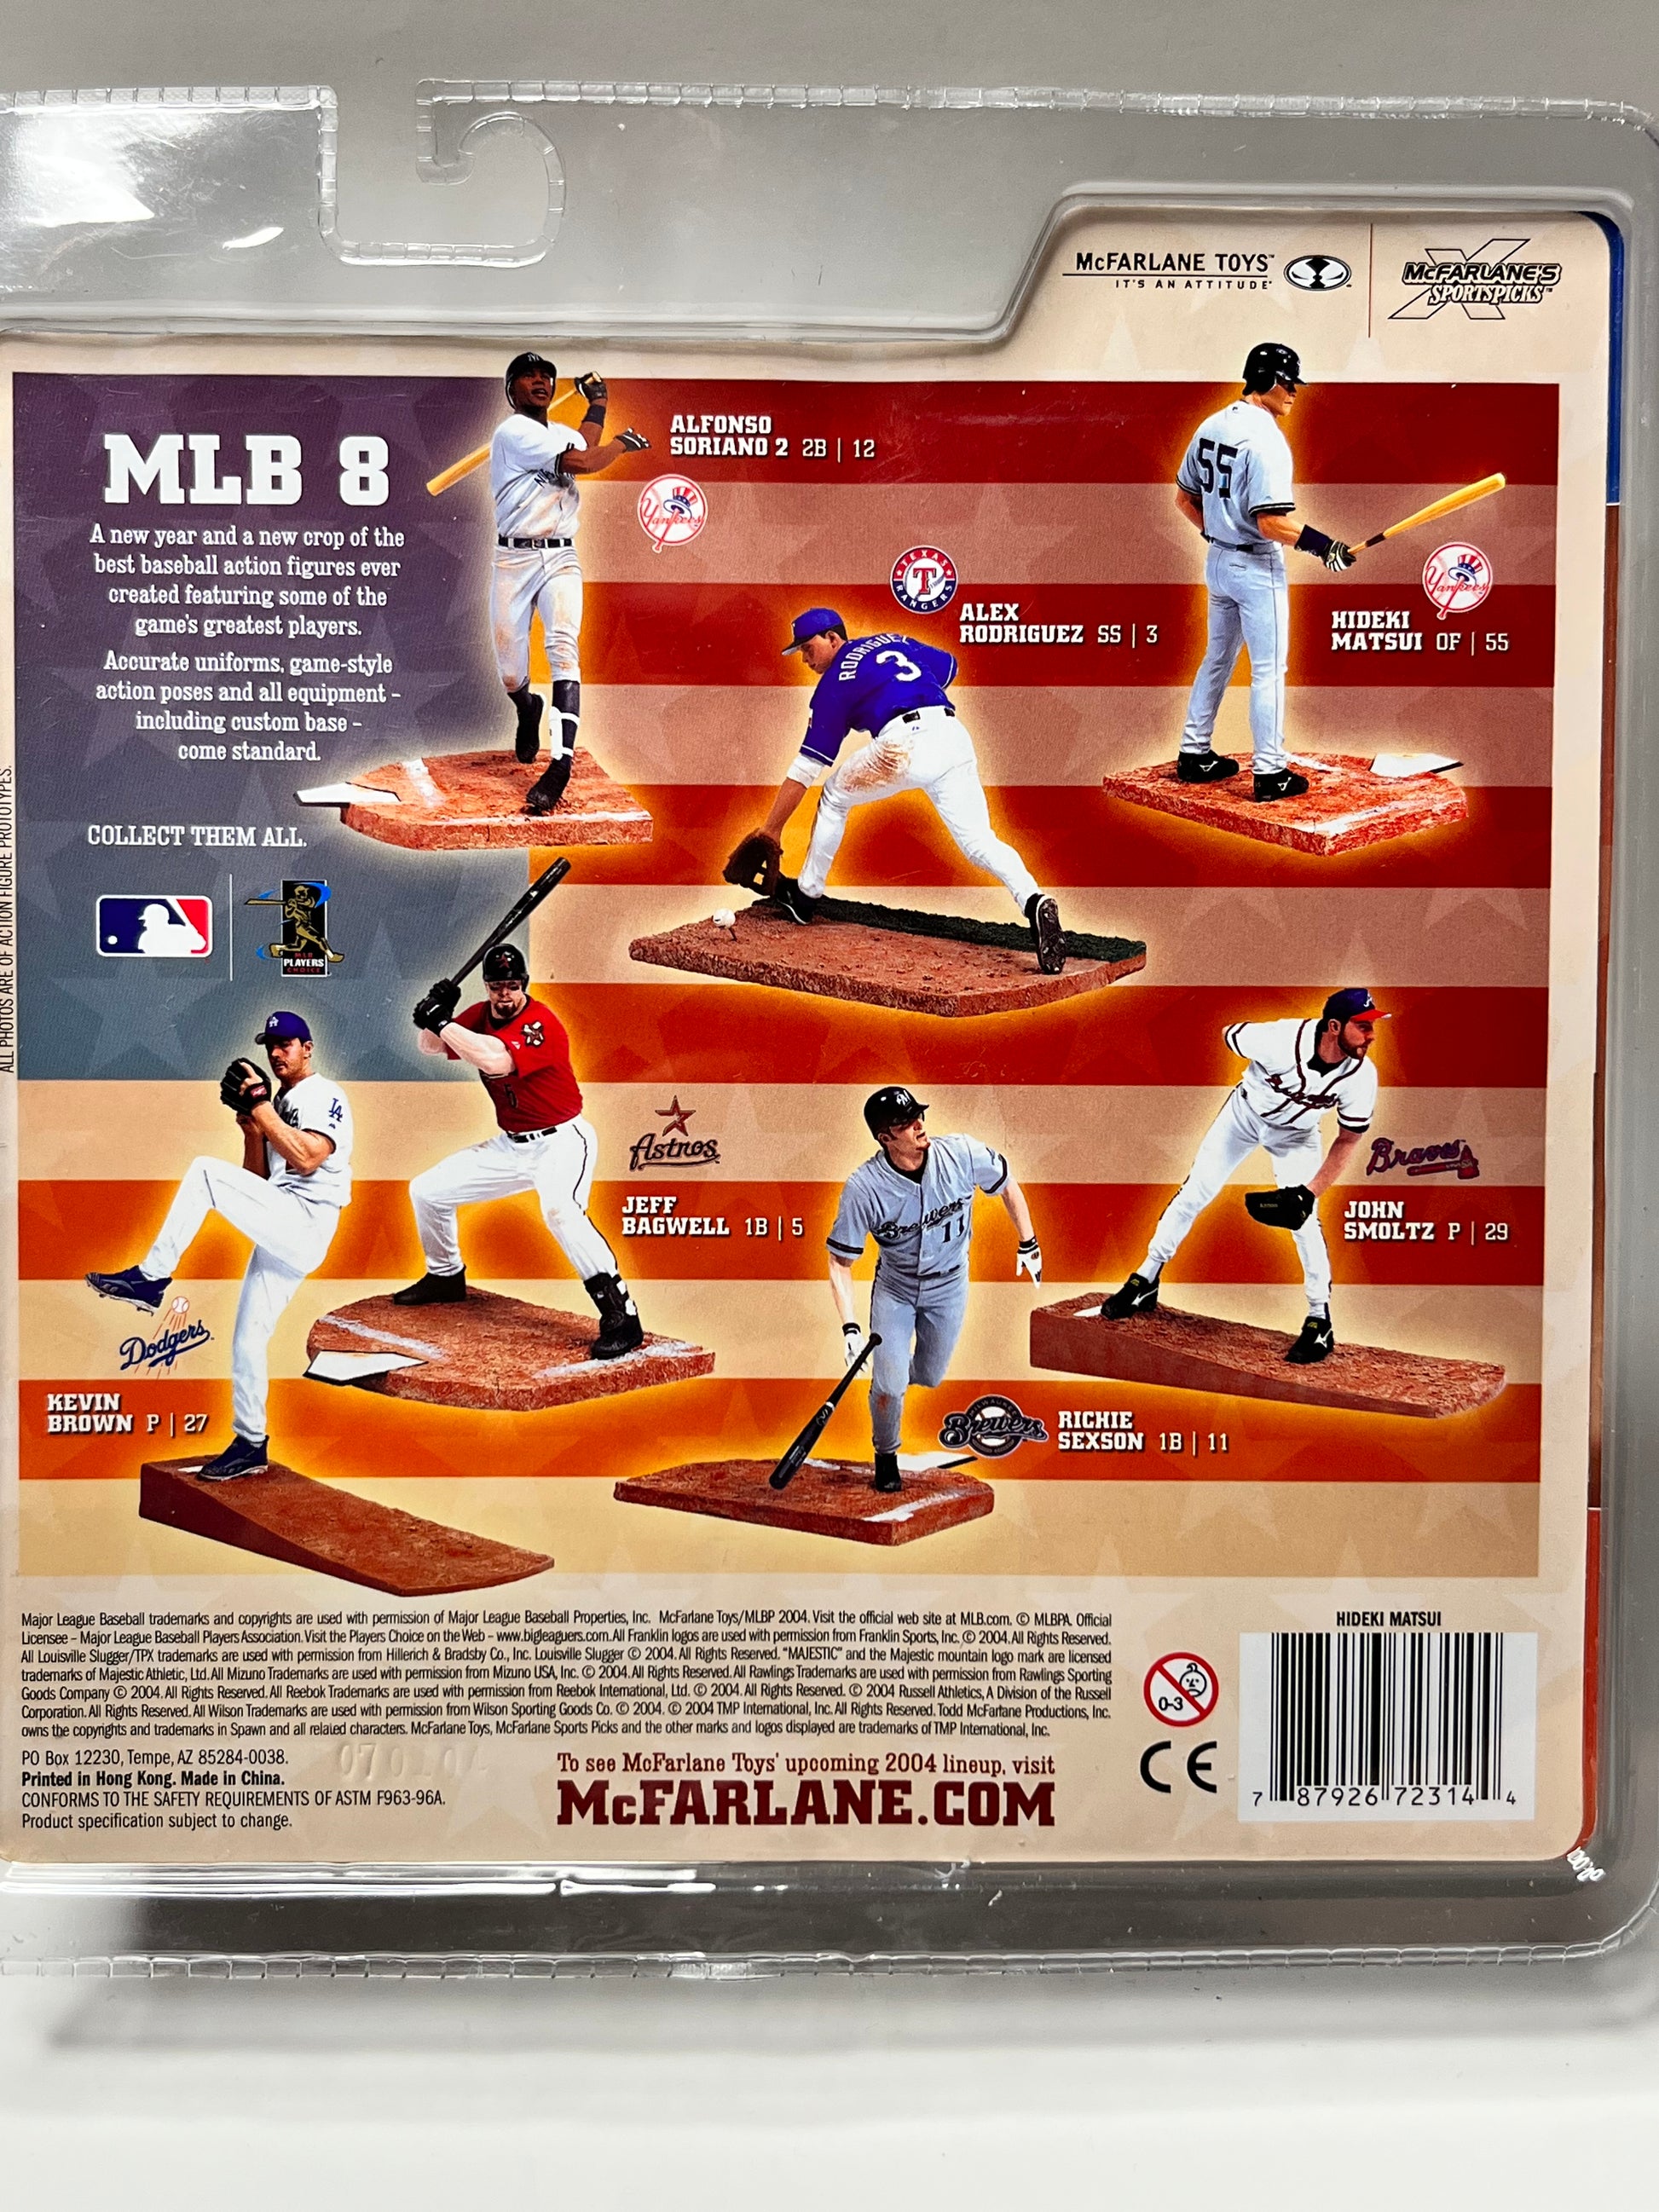 McFarlane's Sport Picks MLB 8 Yankees - Hideki Matsui OF, 55 (McFarlane  Toys)